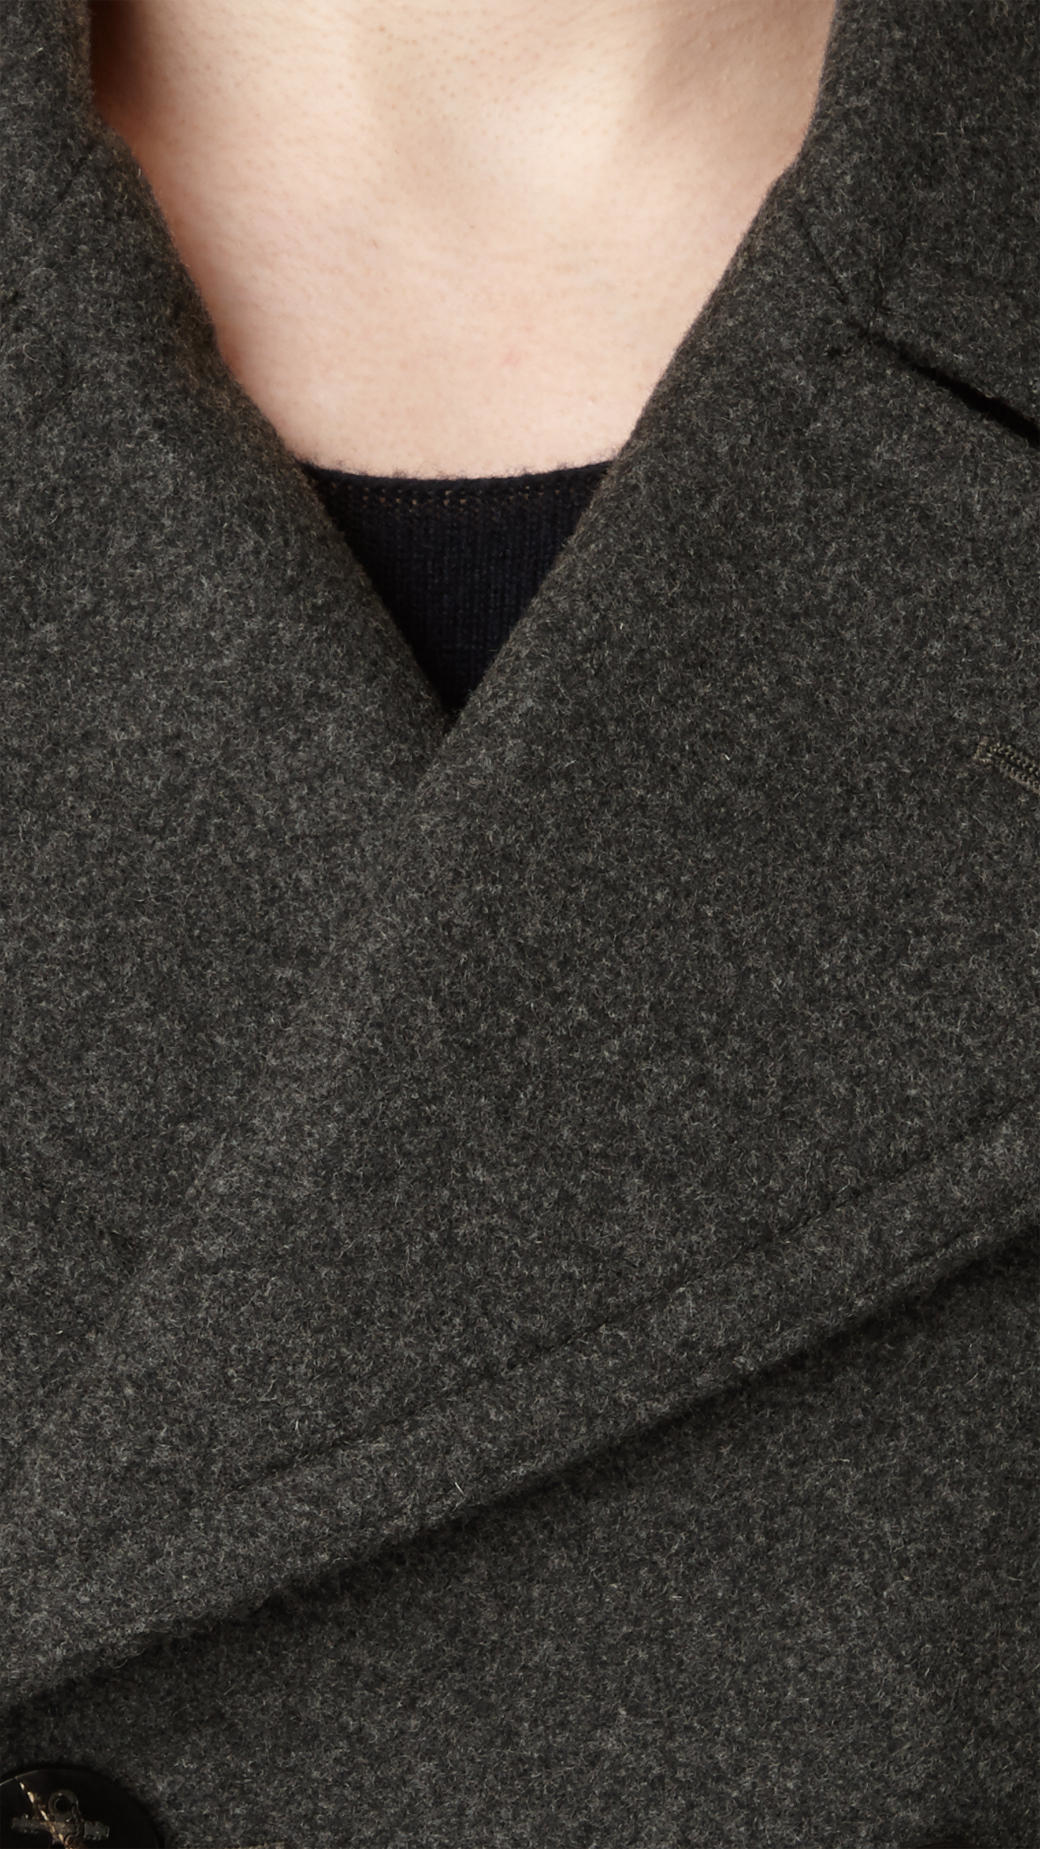 Burberry Wool Cashmere Pea Coat in Dark Grey Melange (Gray) for Men - Lyst